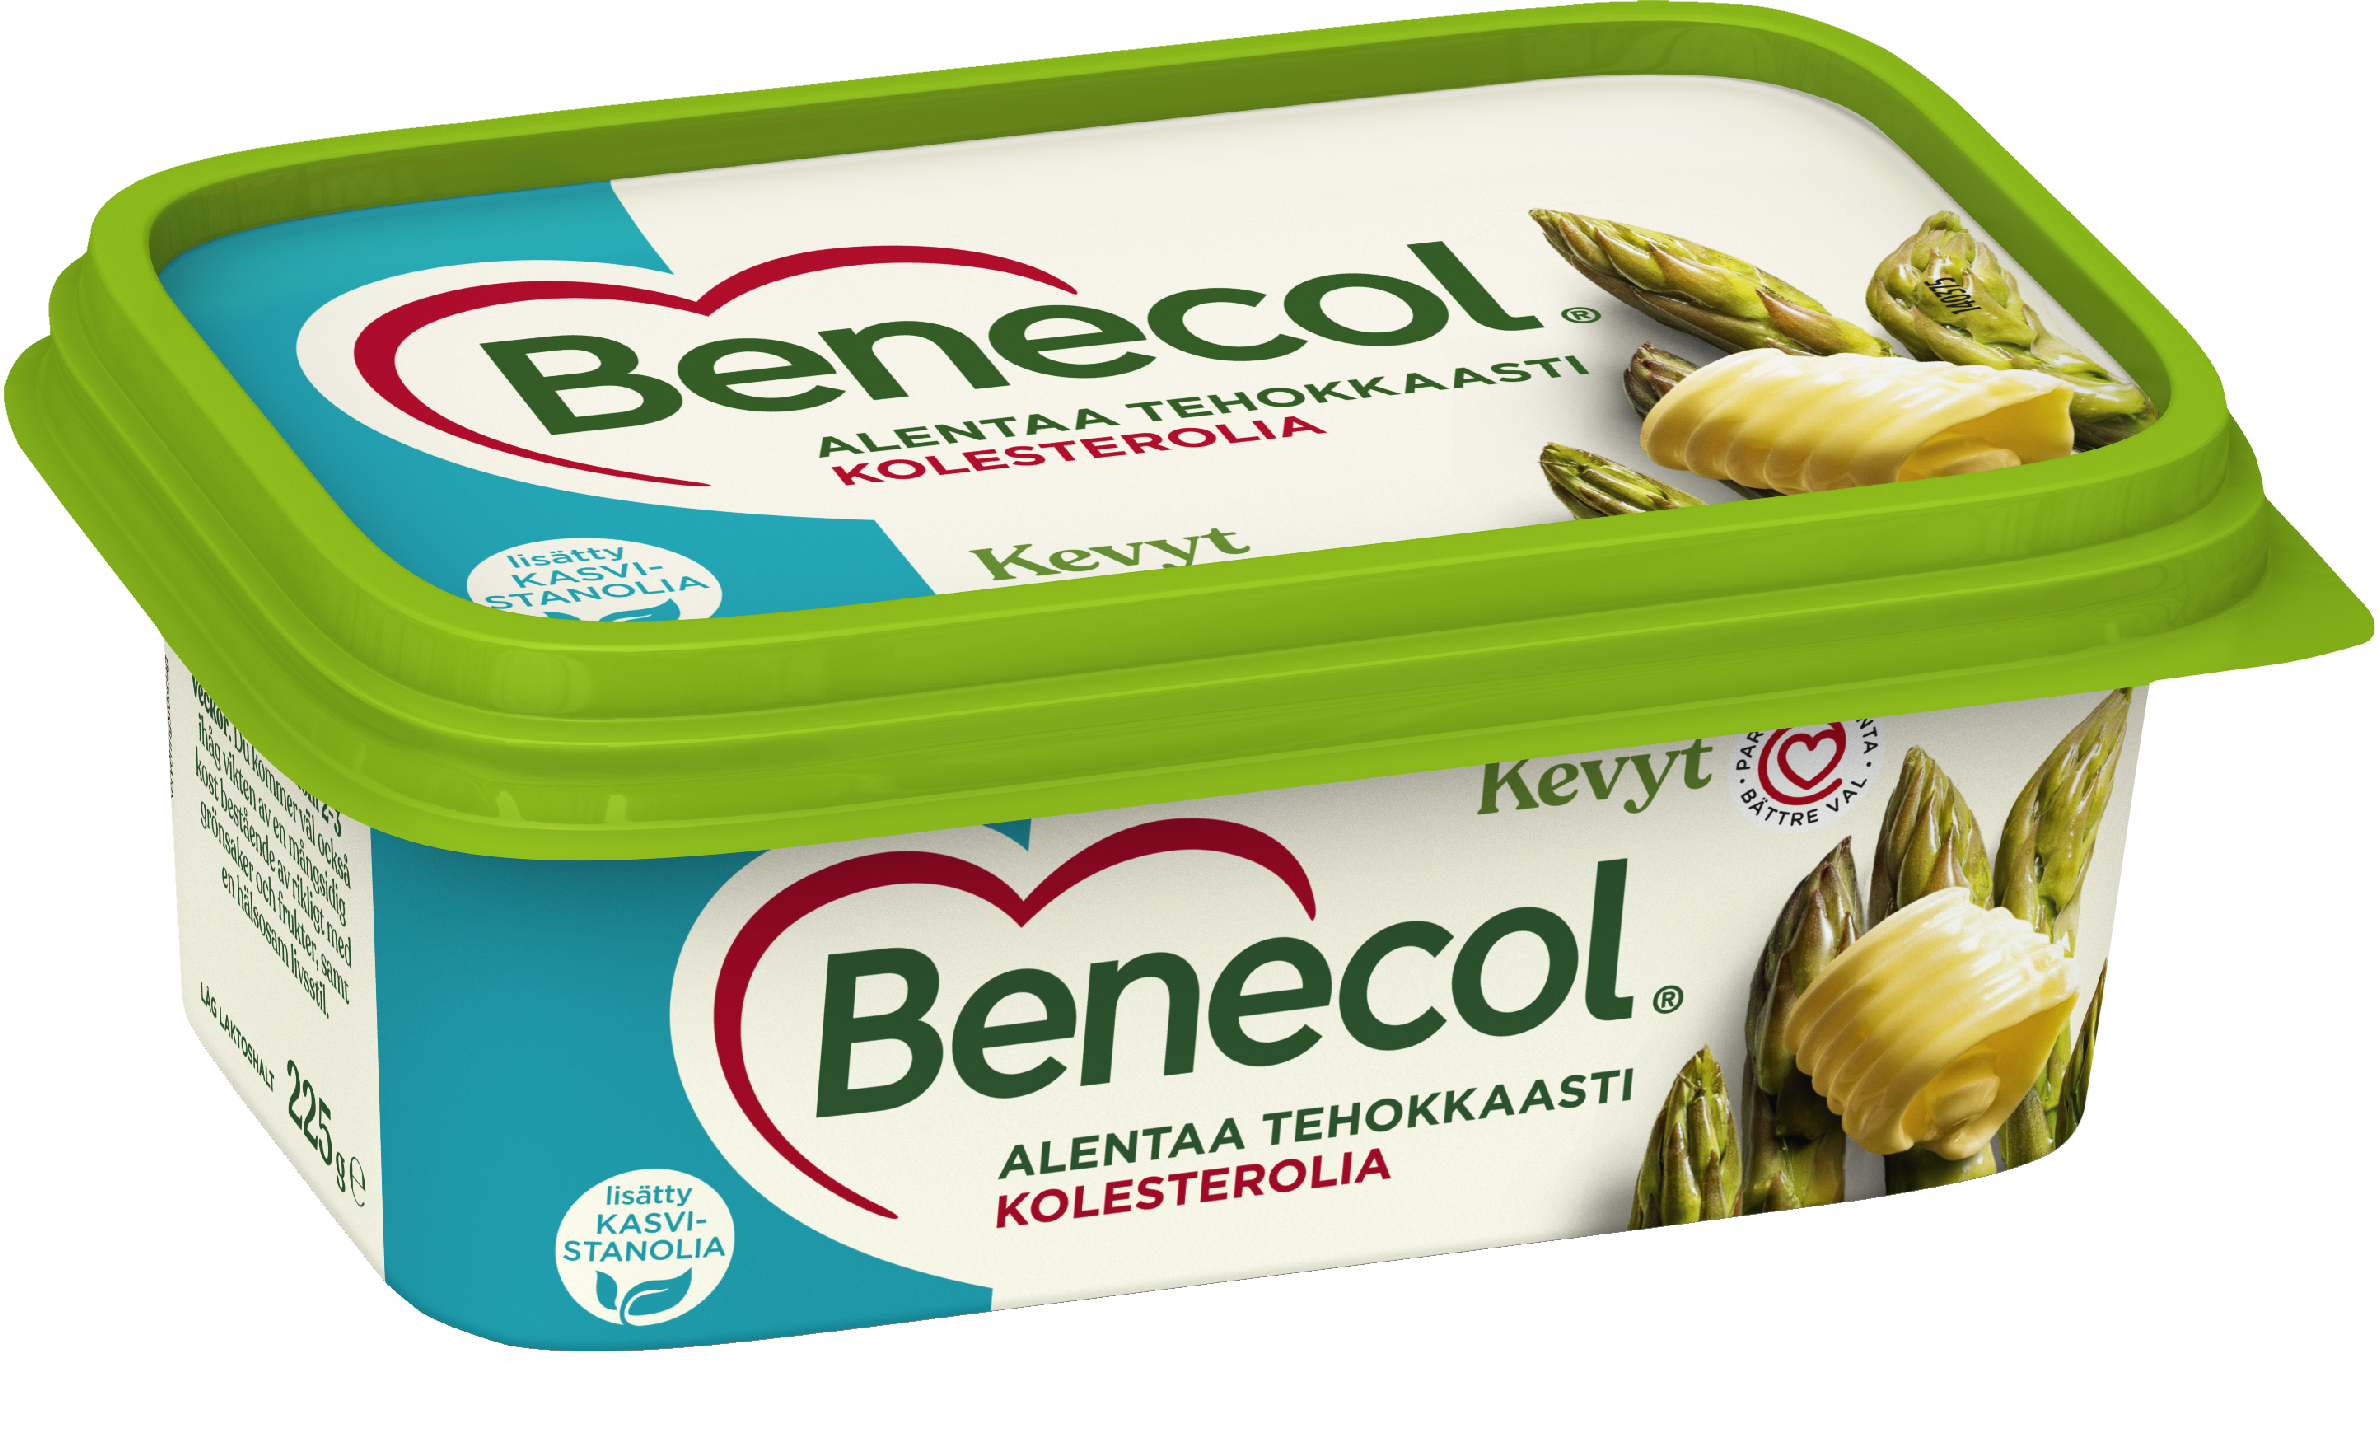 Benecol 35% kevyt kasvirasvalevite 225 g